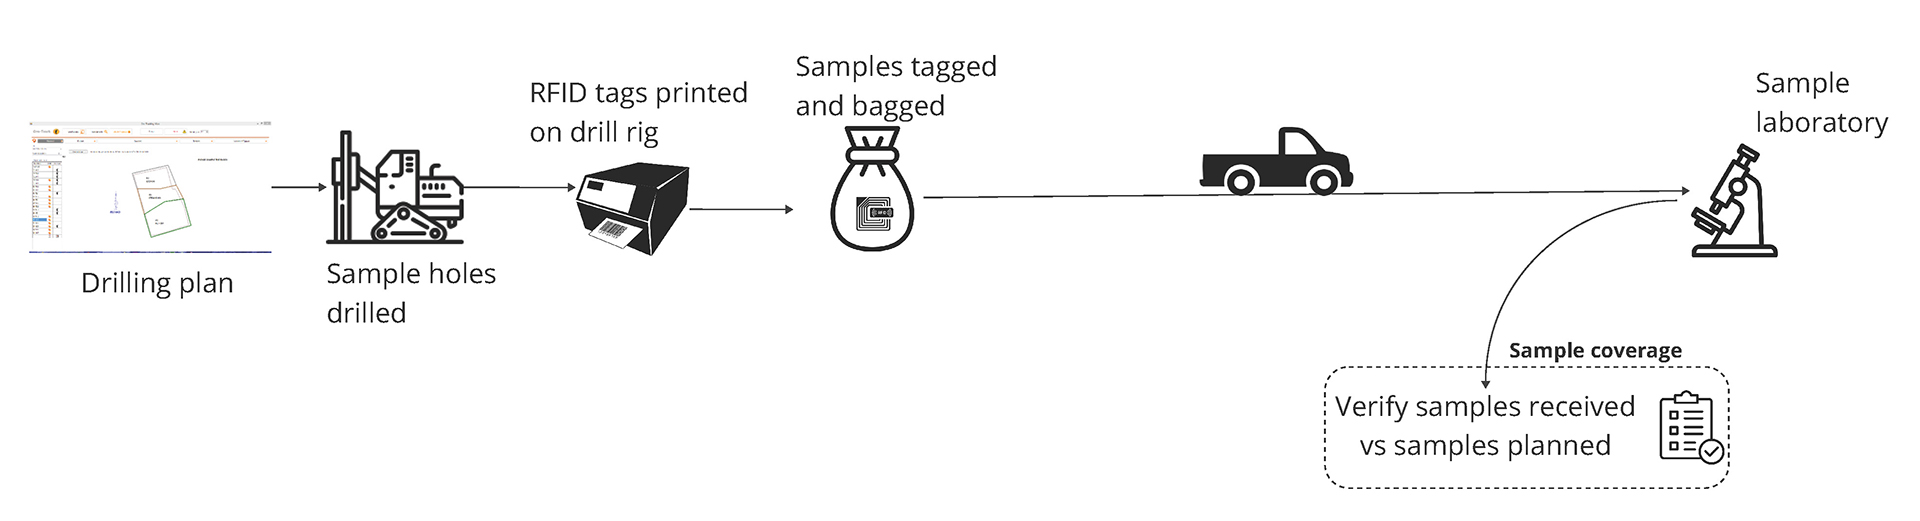 sample tracking